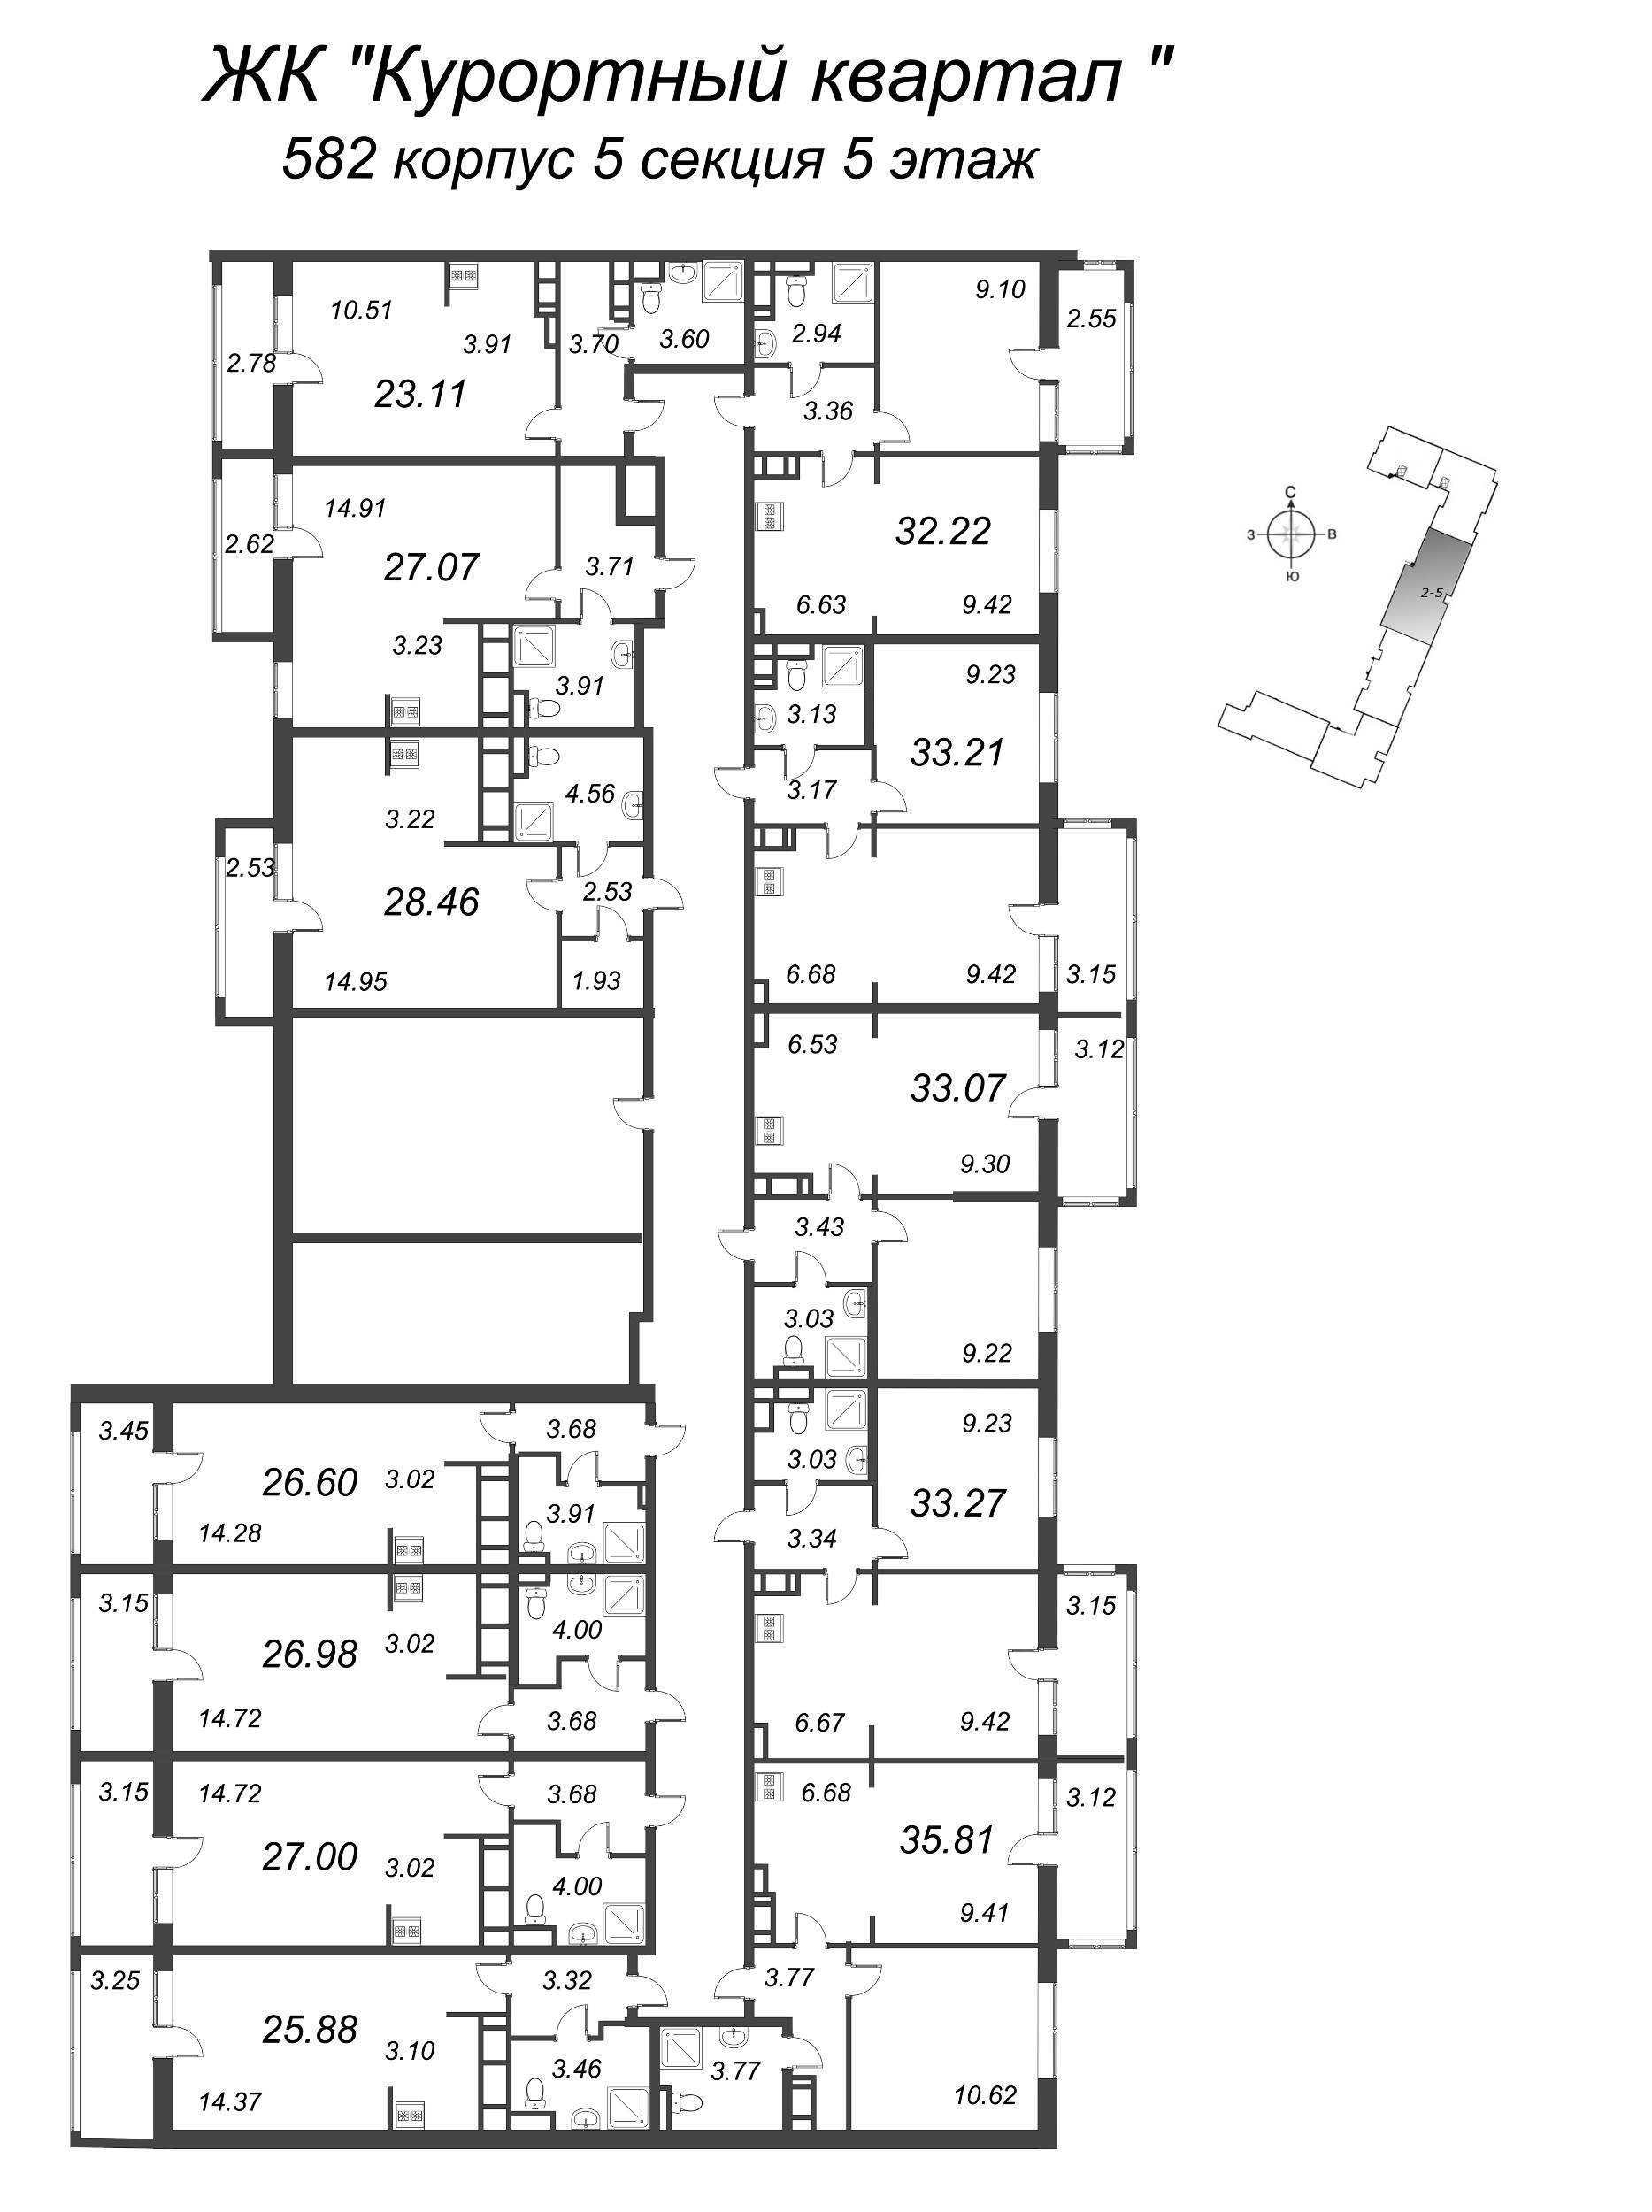 2-комнатная (Евро) квартира, 33.21 м² - планировка этажа